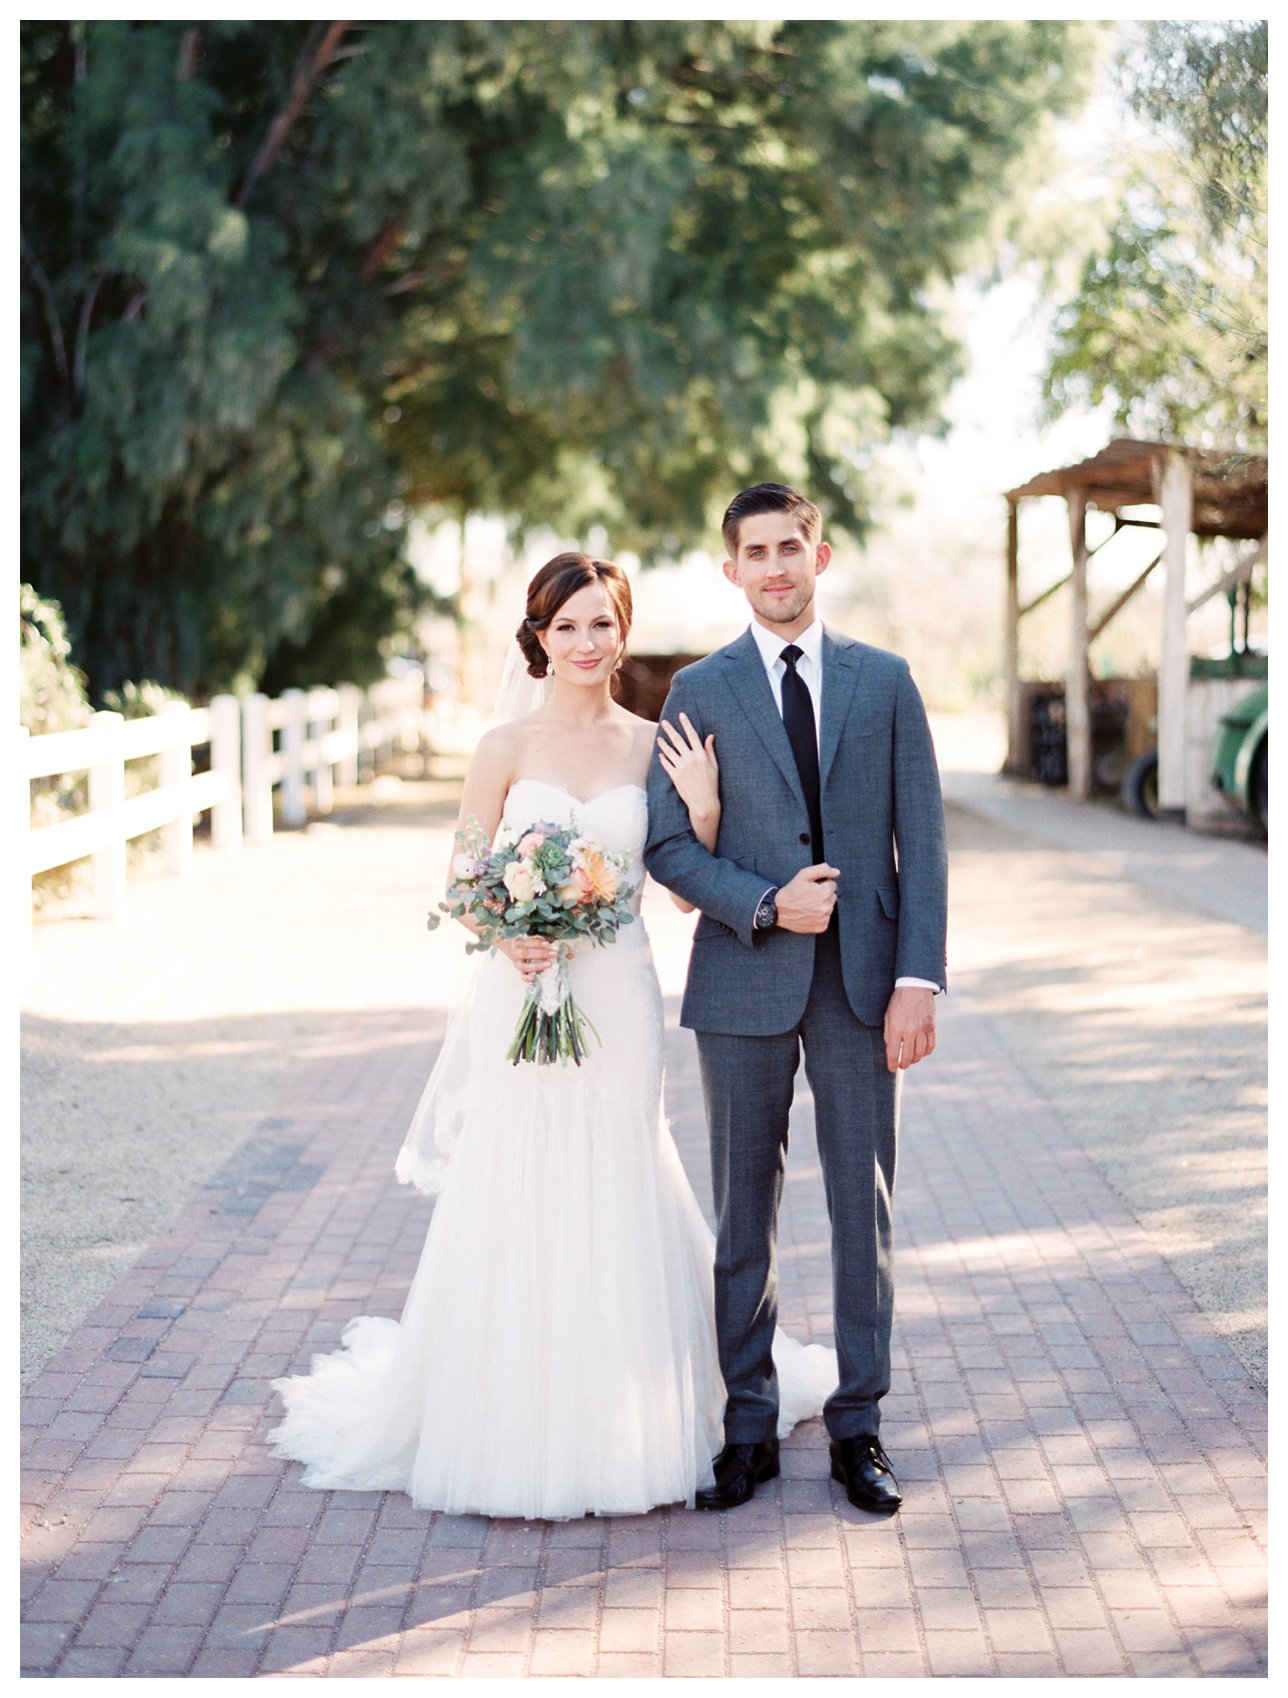 Windmill Winery wedding photos - Scottsdale Wedding Photographer | Rachel Solomon Photography_5131